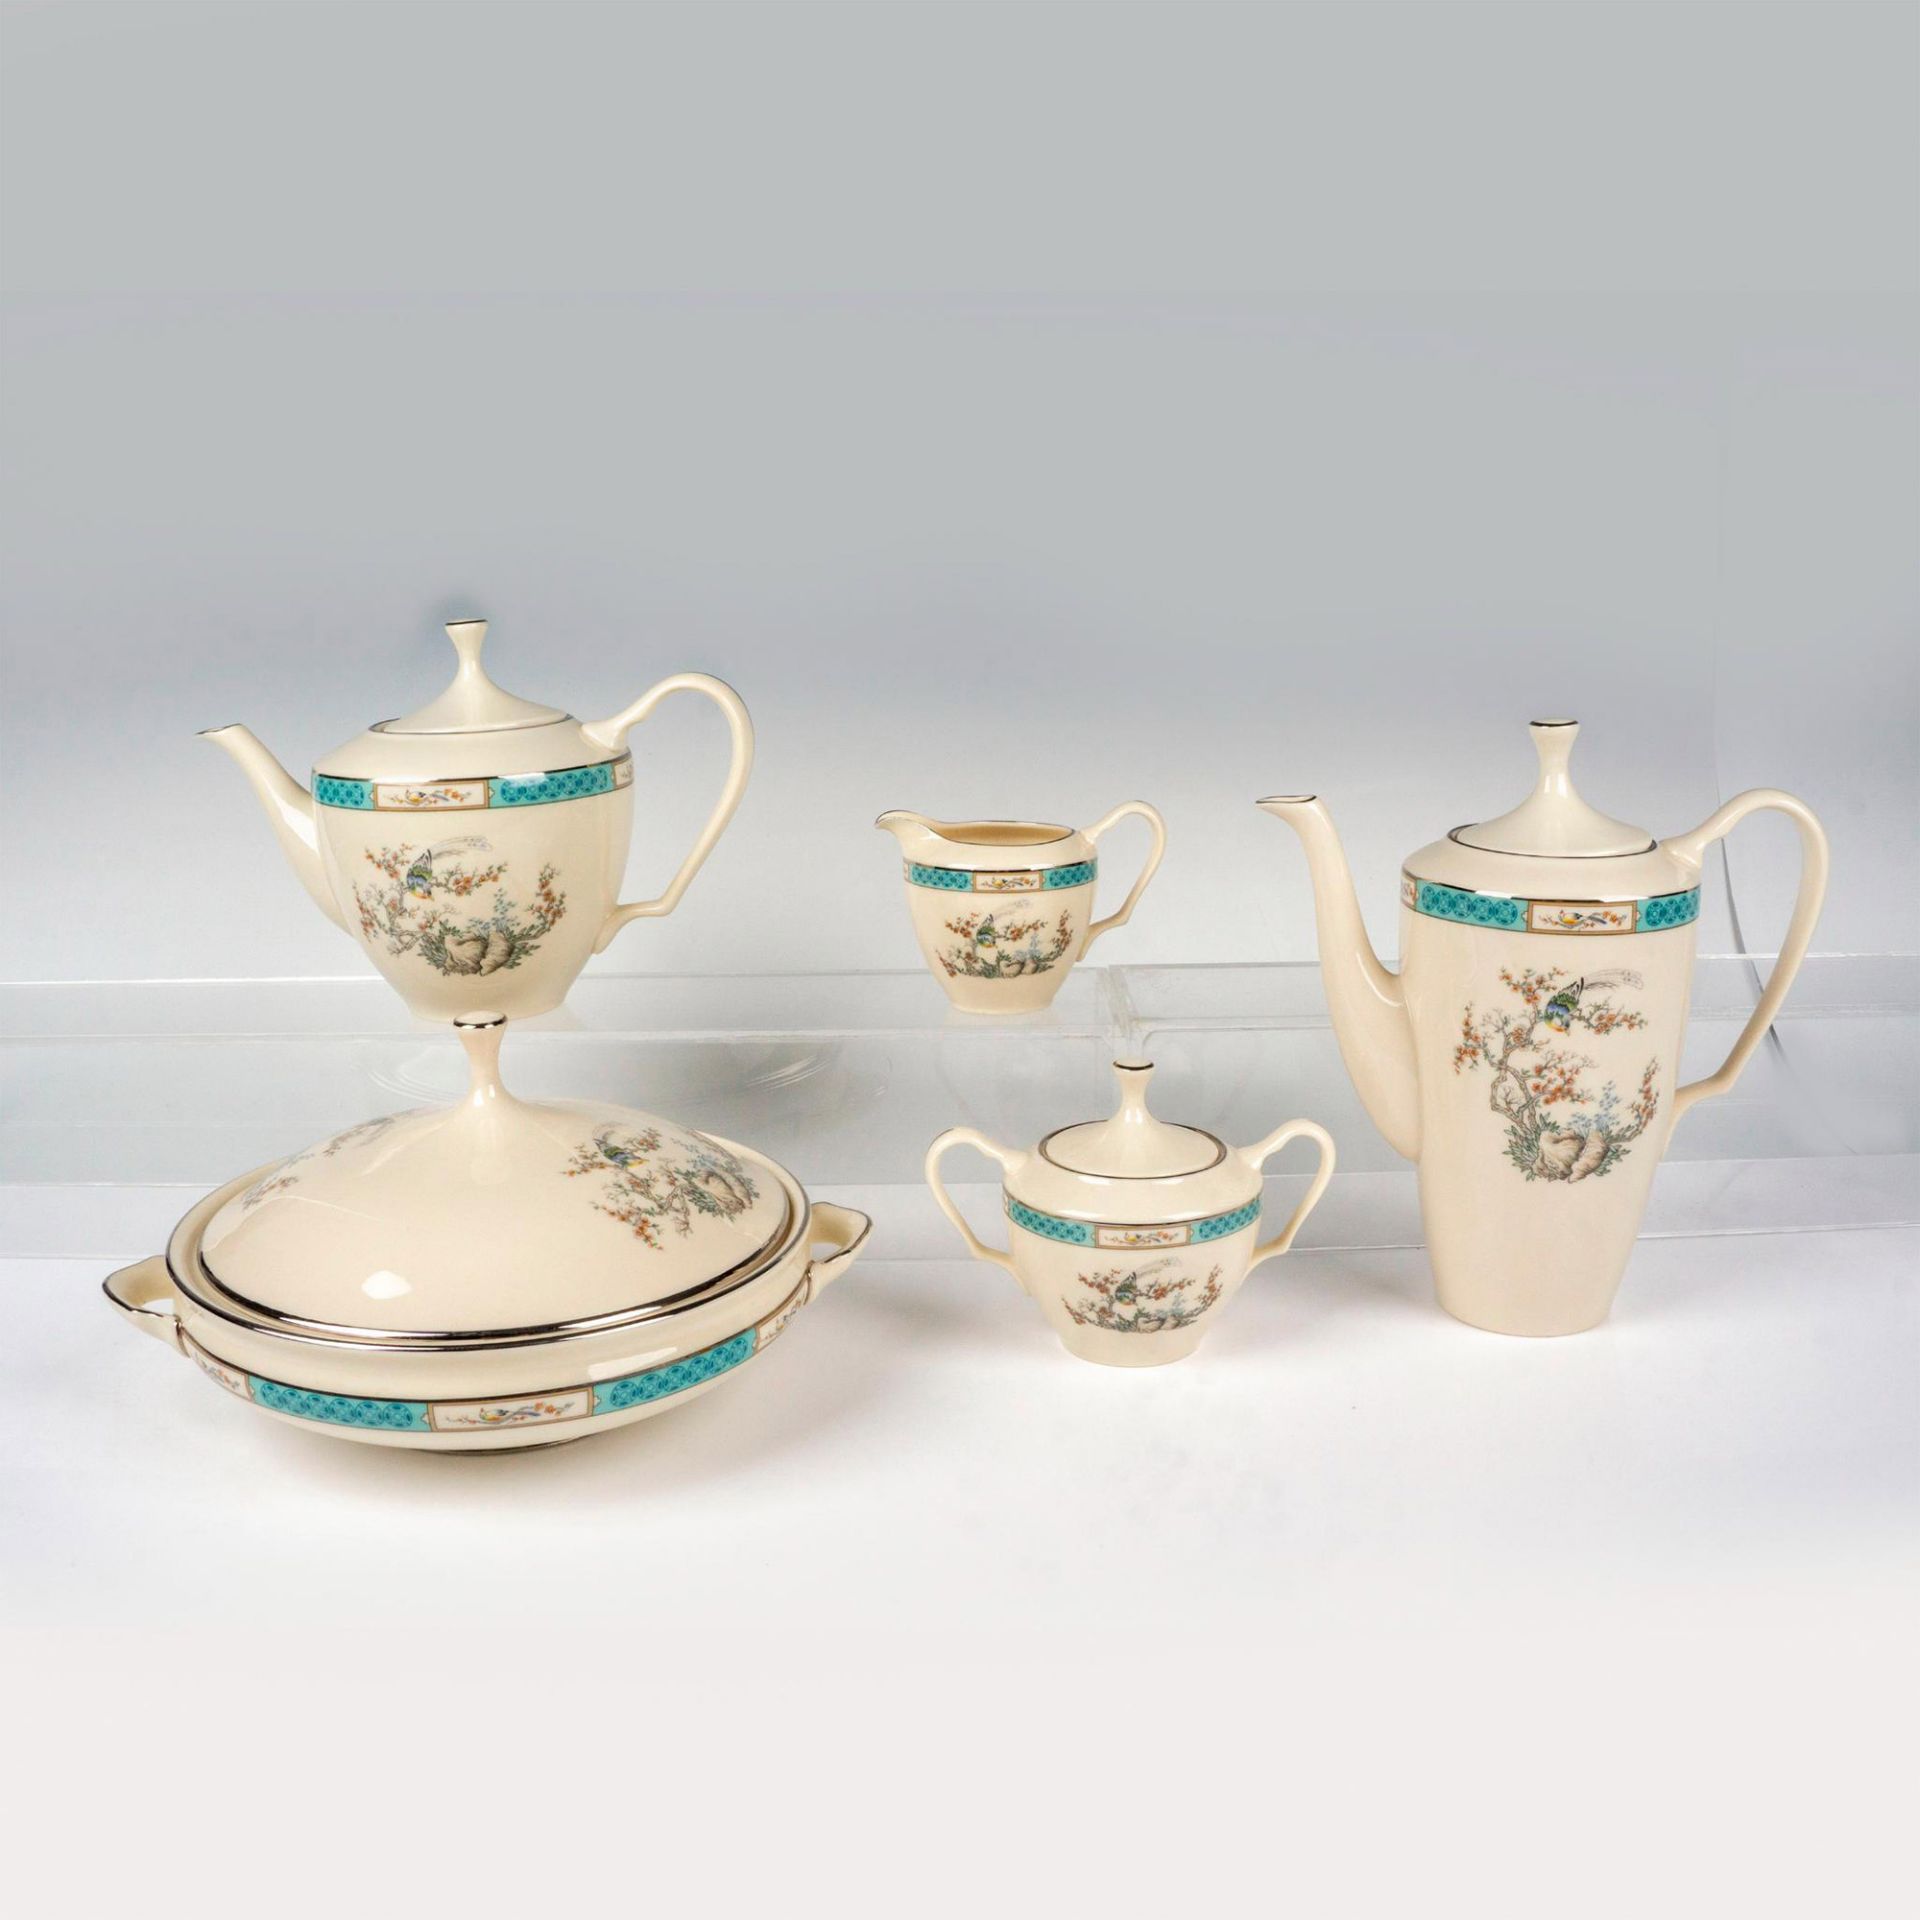 5pc Lenox Teapot, Coffee Pot, Serveware, Plum Blossoms